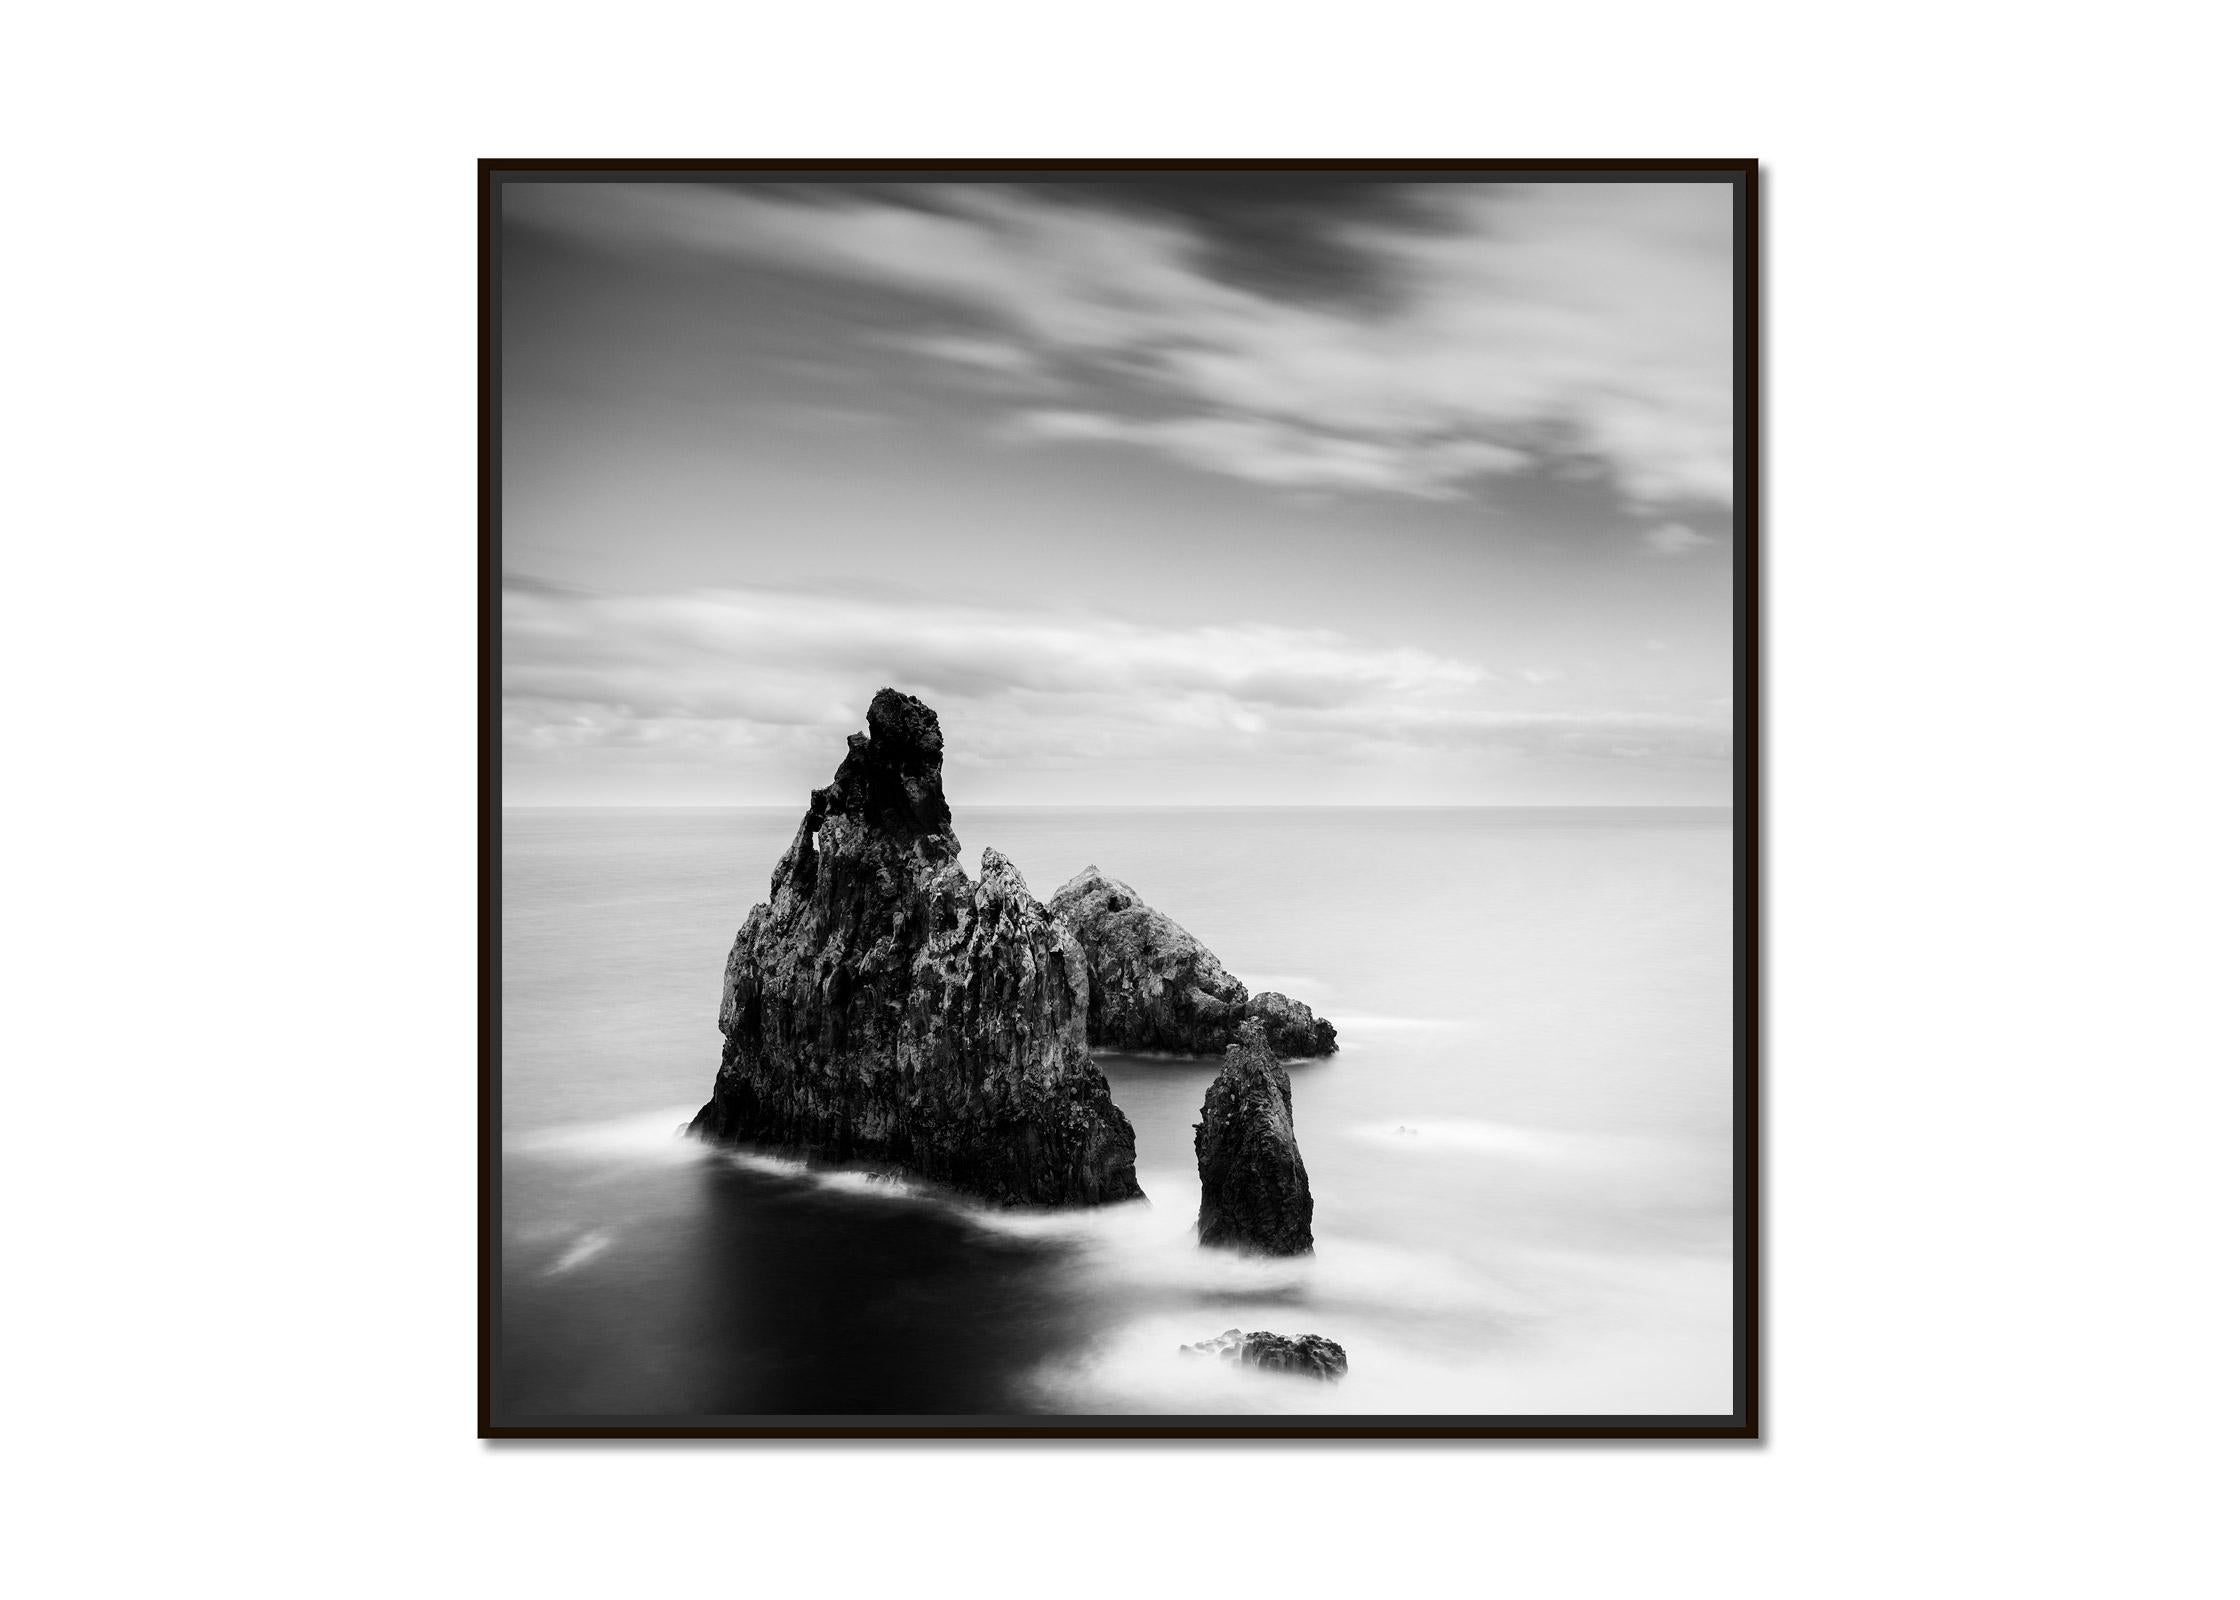 Ribeira da Janela Rocks, shoreline, black and white art waterscape photography - Photograph by Gerald Berghammer